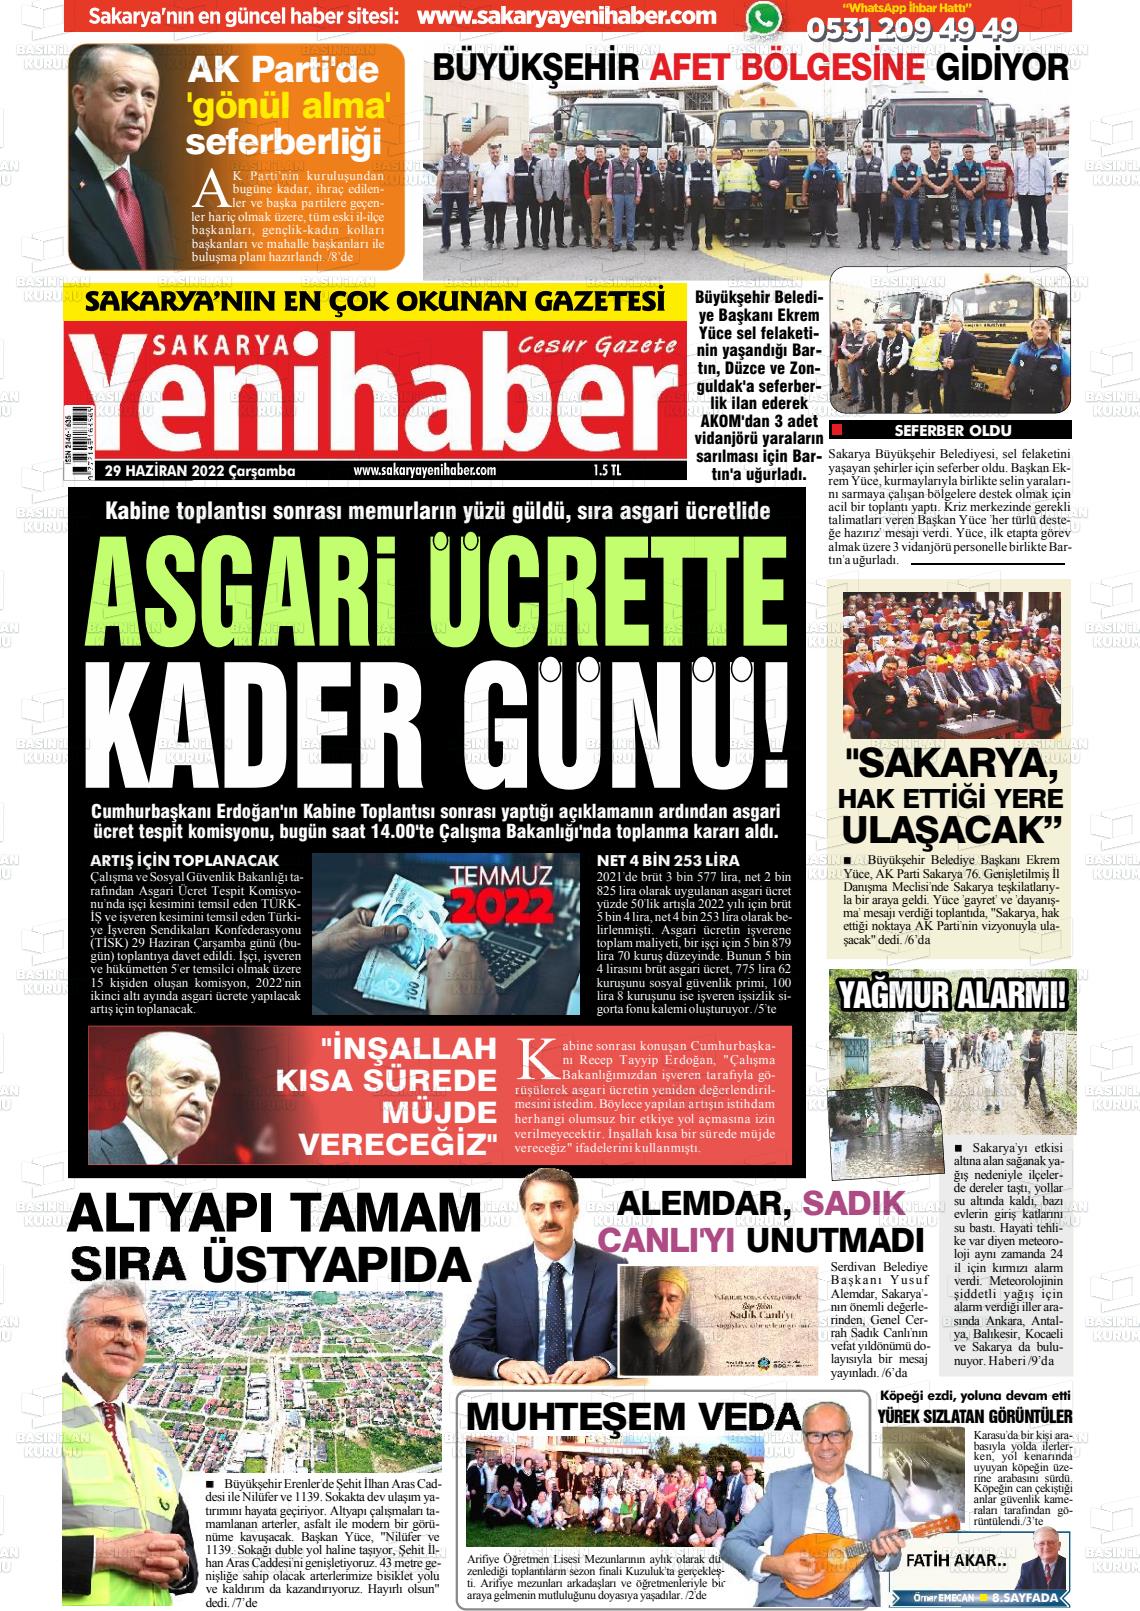 29 Haziran 2022 Sakarya Yeni Haber Gazete Manşeti